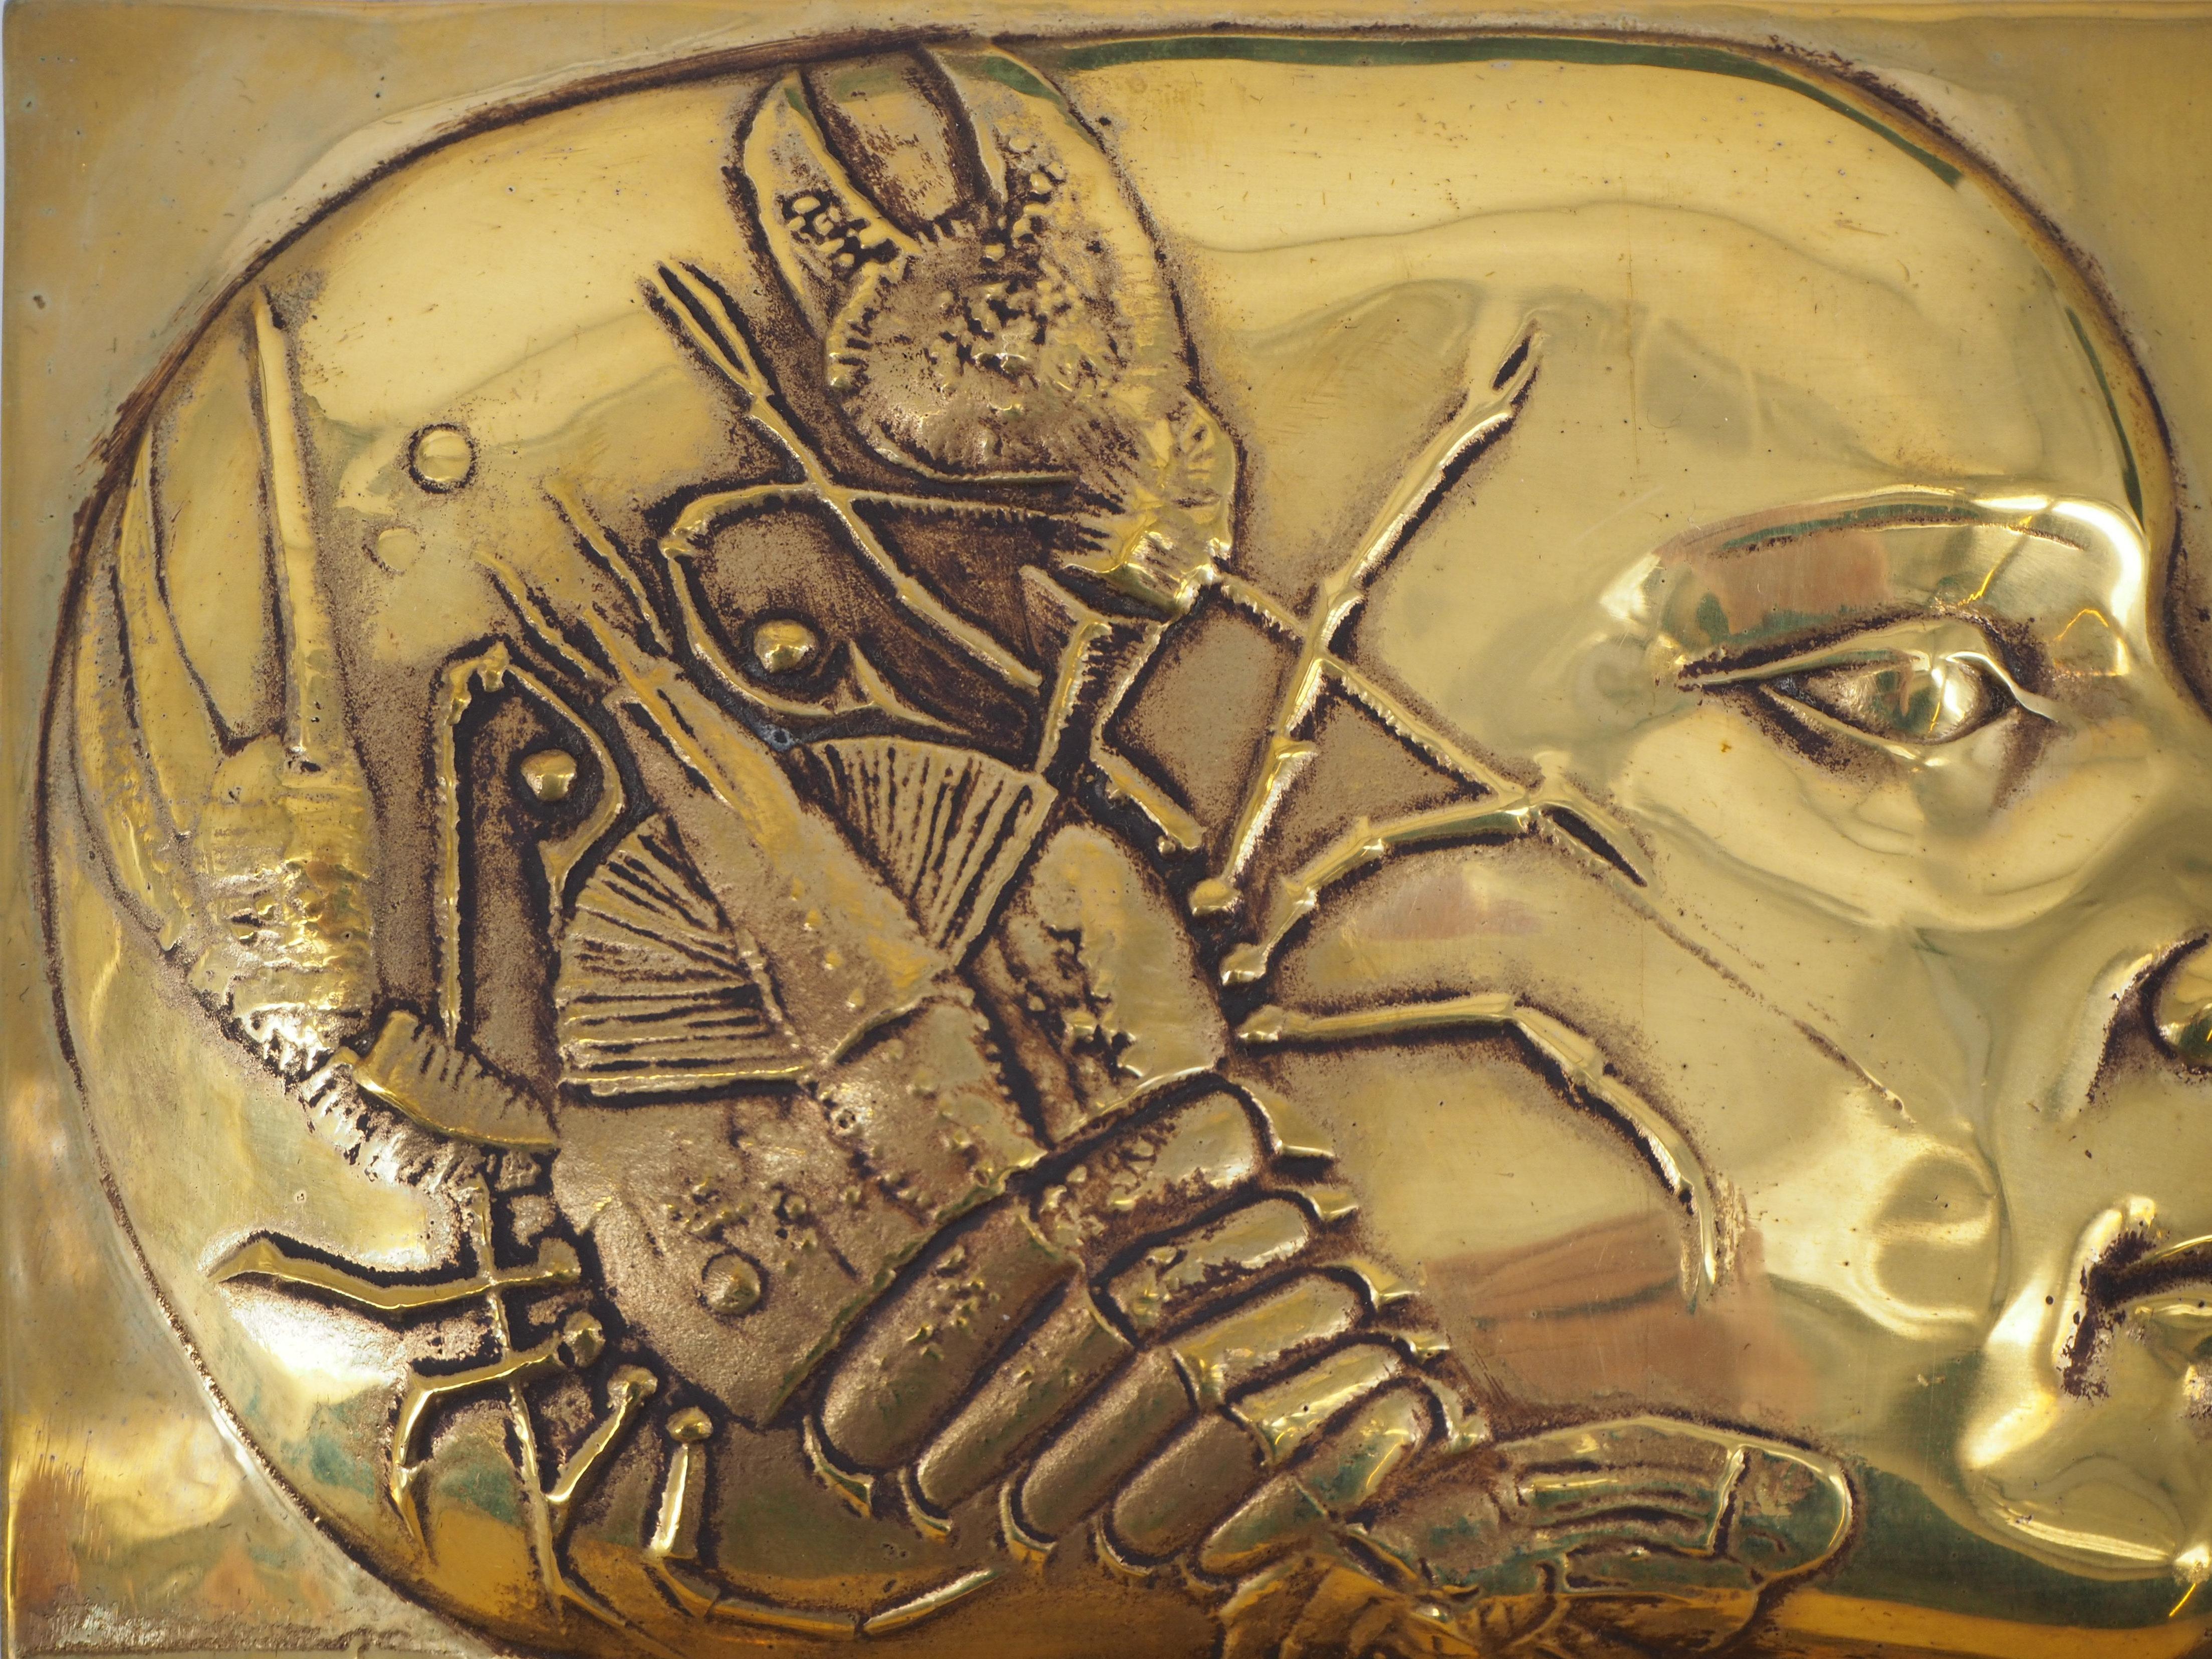 Woman with Lobster - Original signed golden bronze sculpture, 1988 - Gold Figurative Sculpture by Pierre-Yves Trémois